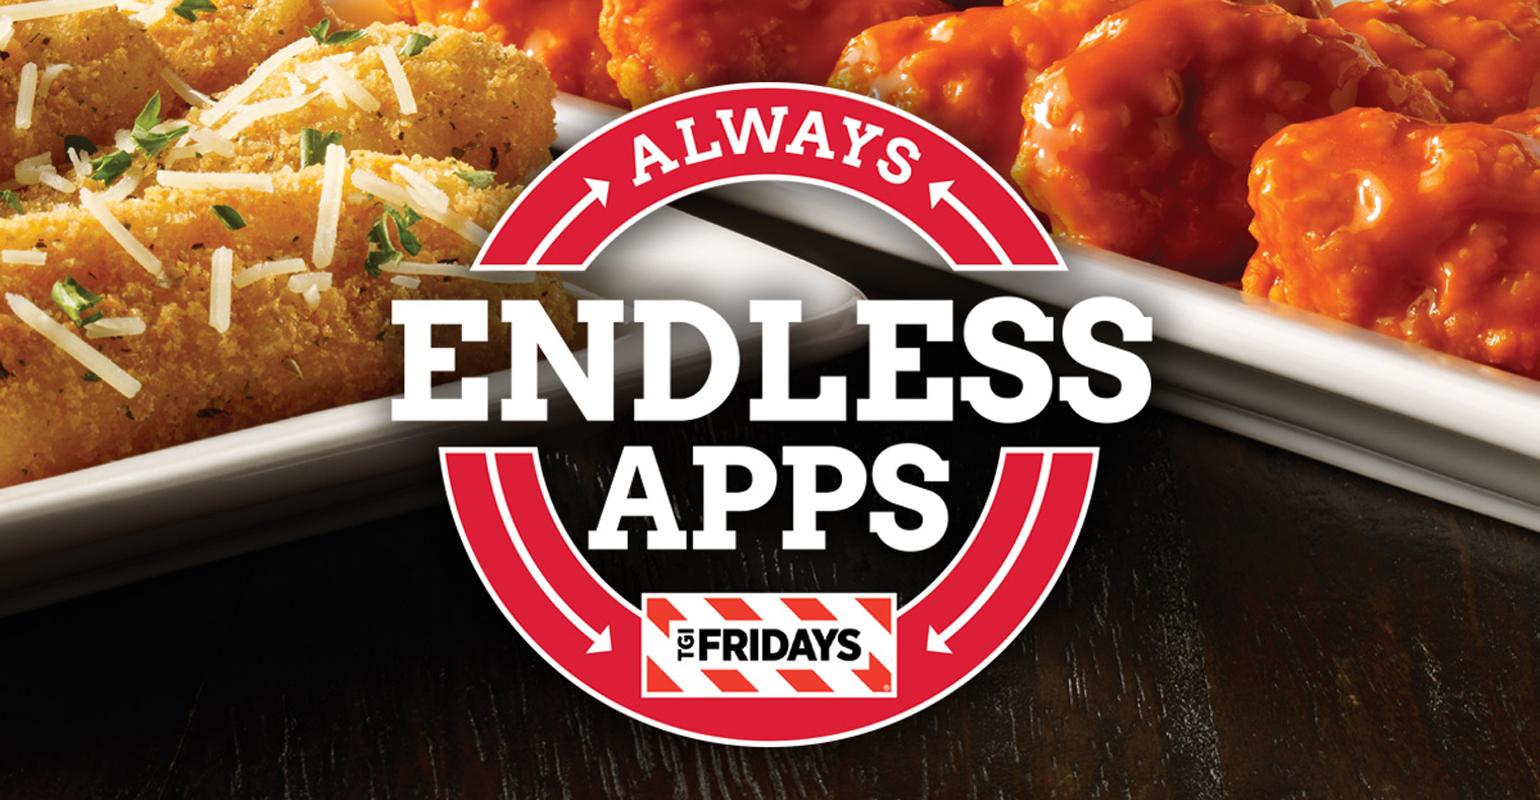 TGI Fridays makes Endless Apps permanent Nation's Restaurant News